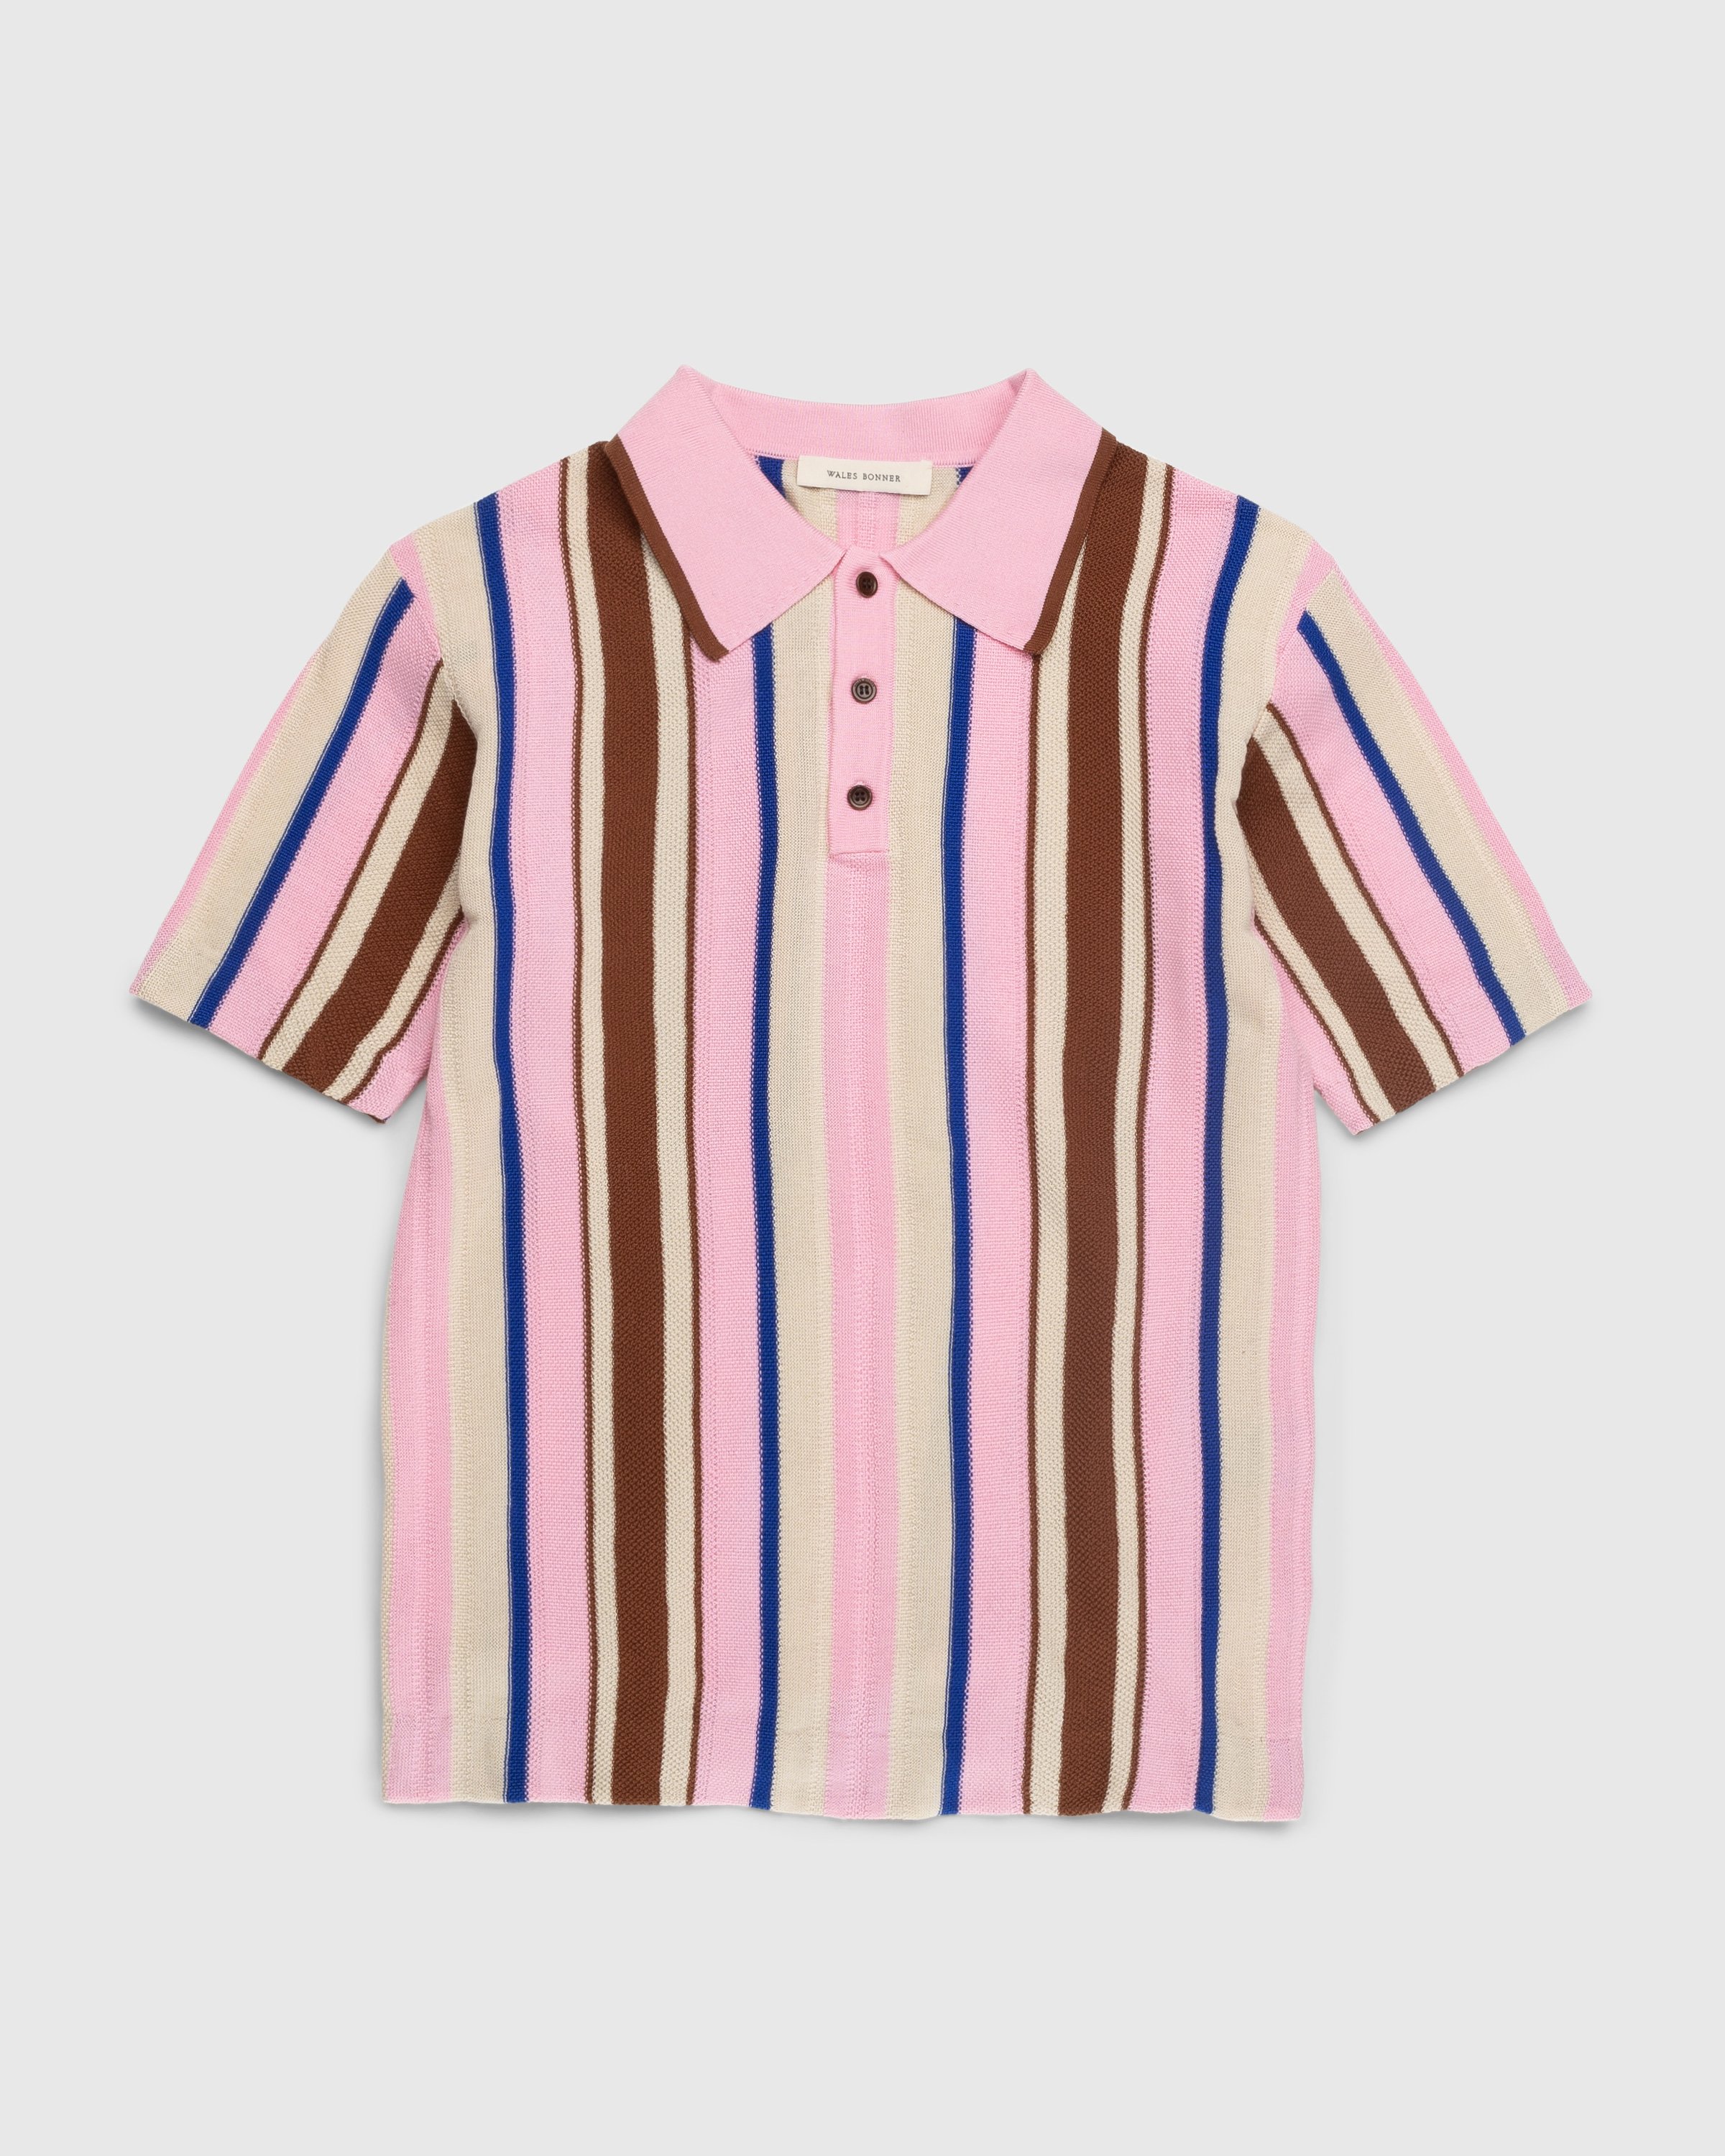 Wales Bonner - Optimist Polo Shirt - Clothing - Pink - Image 1